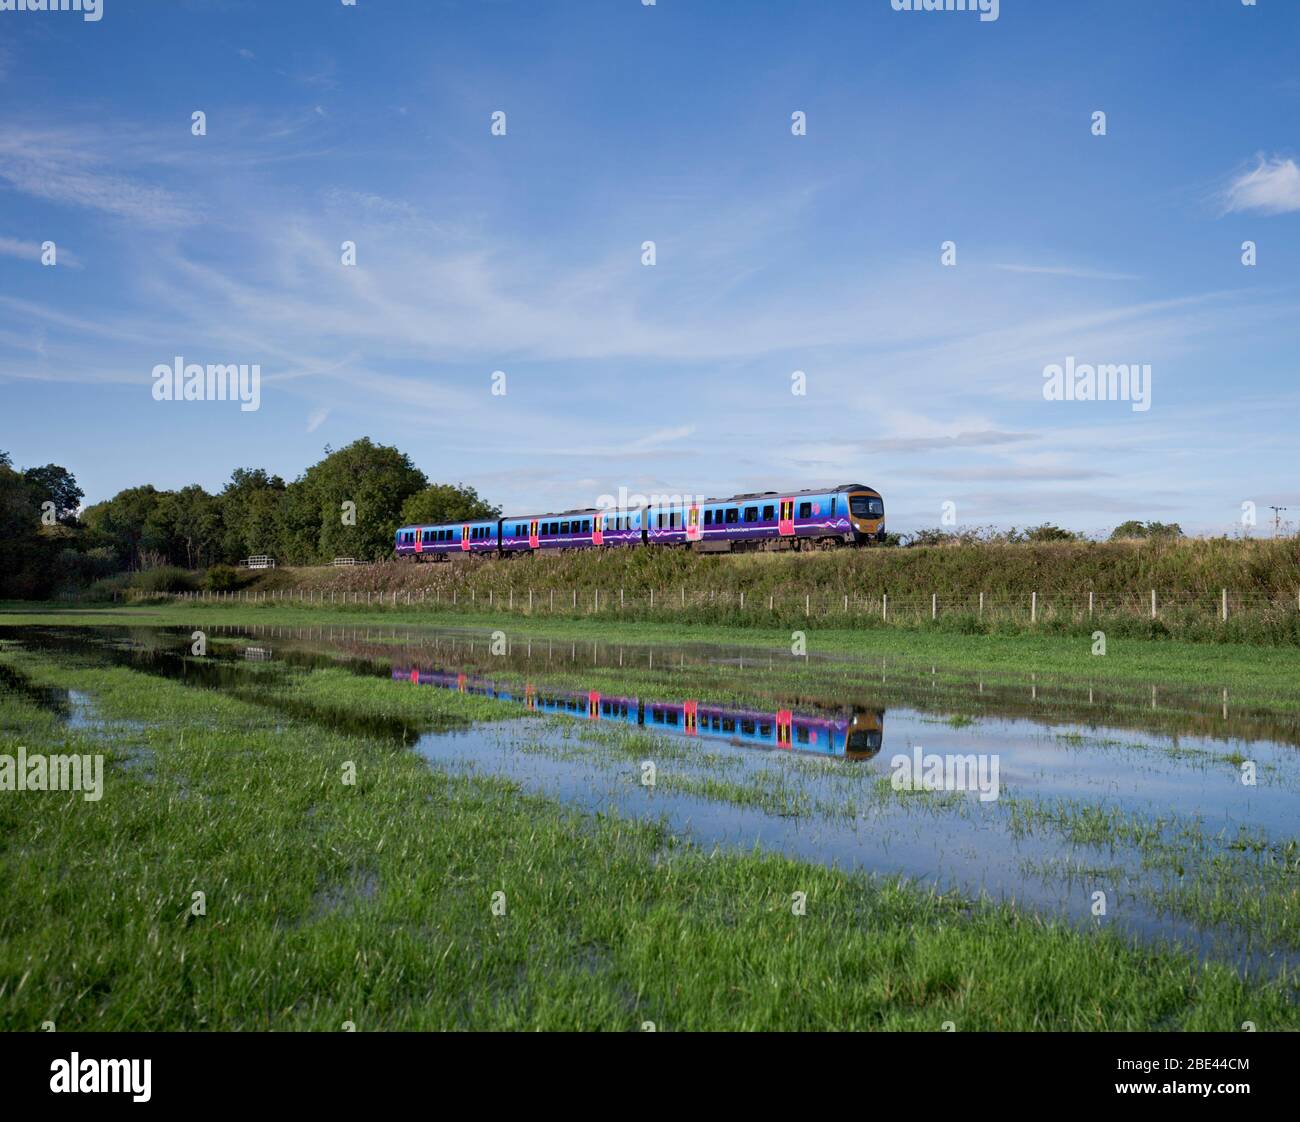 First Transpennine Express Siemens Desiro class 185 train reflected in a flooded field Stock Photo